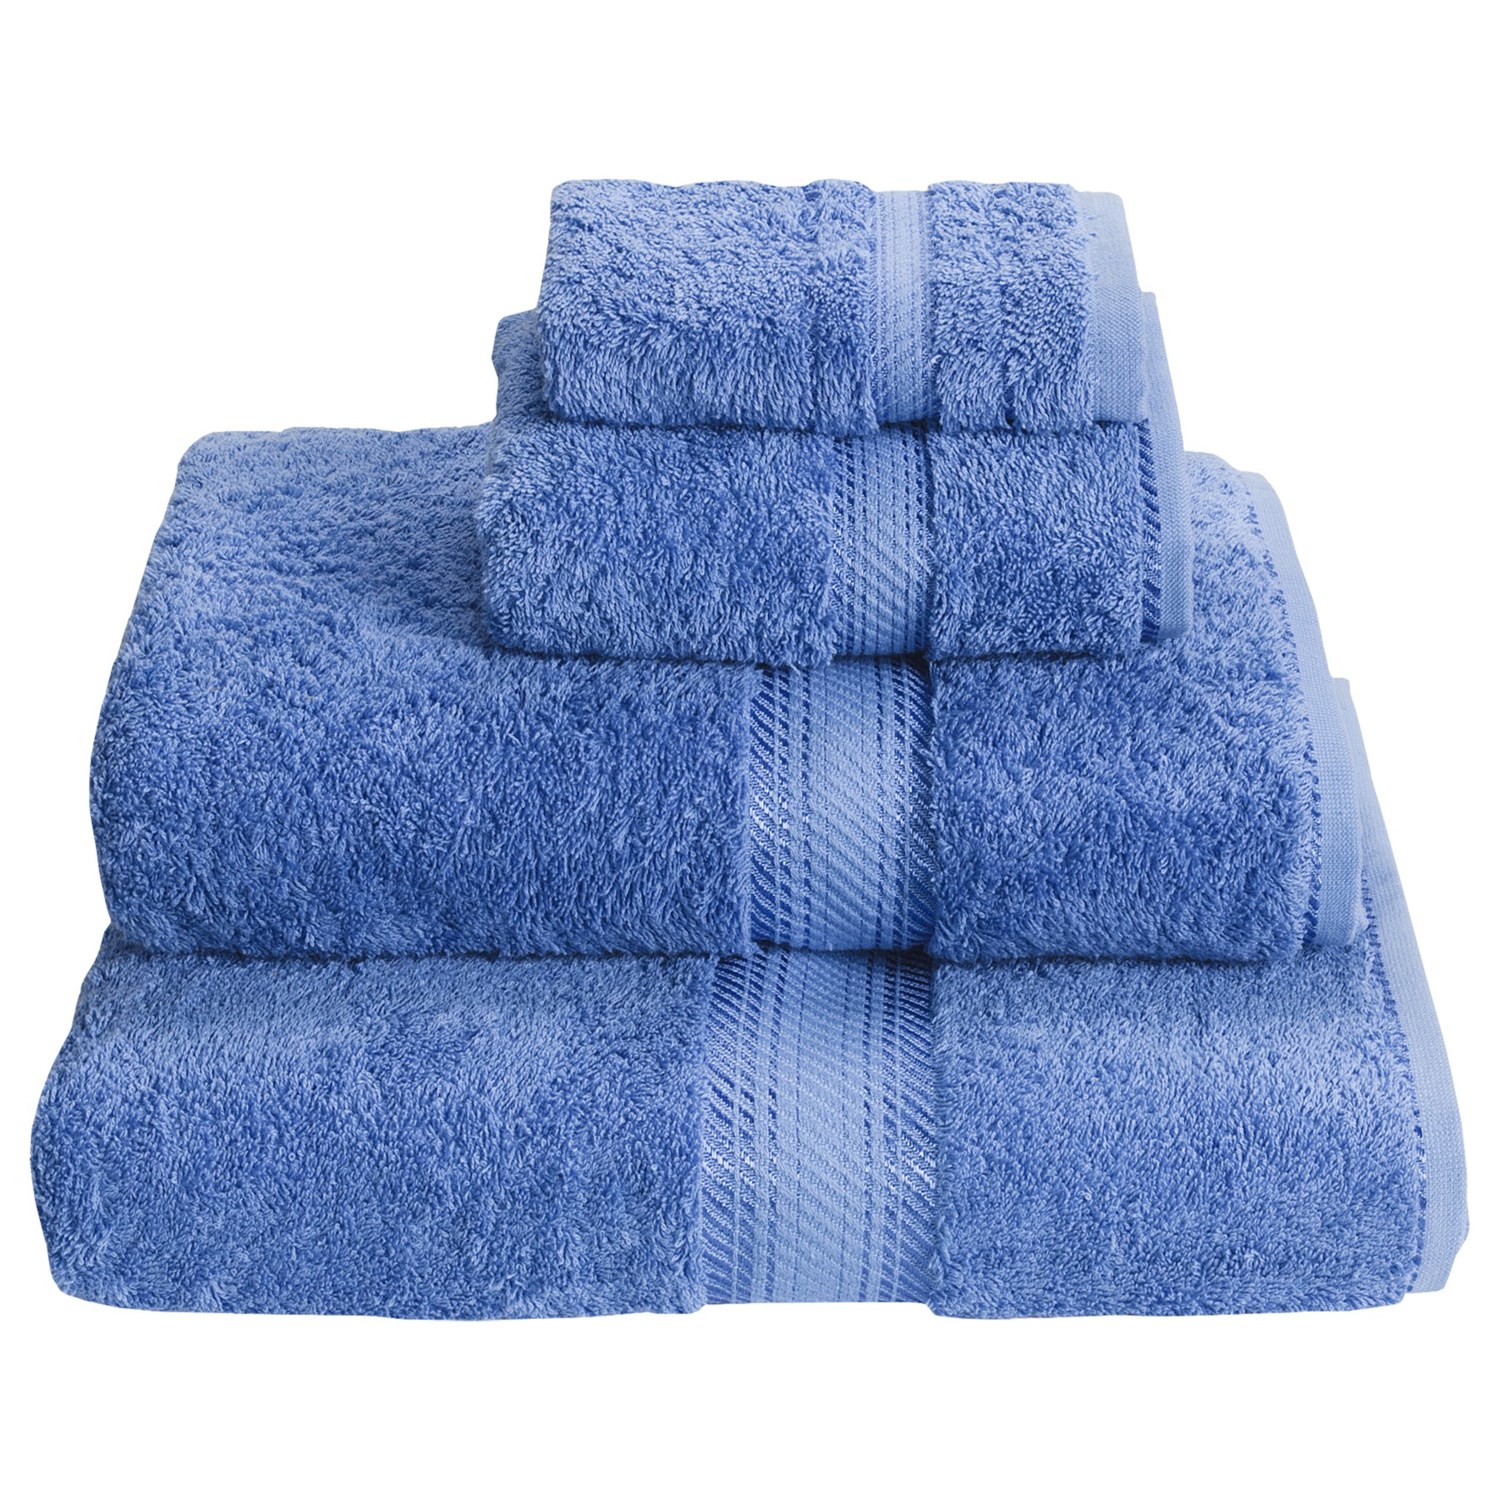 Chortex Rhapsody Royale Hand Towel - 660gsm Egyptian Cotton - Save 60%